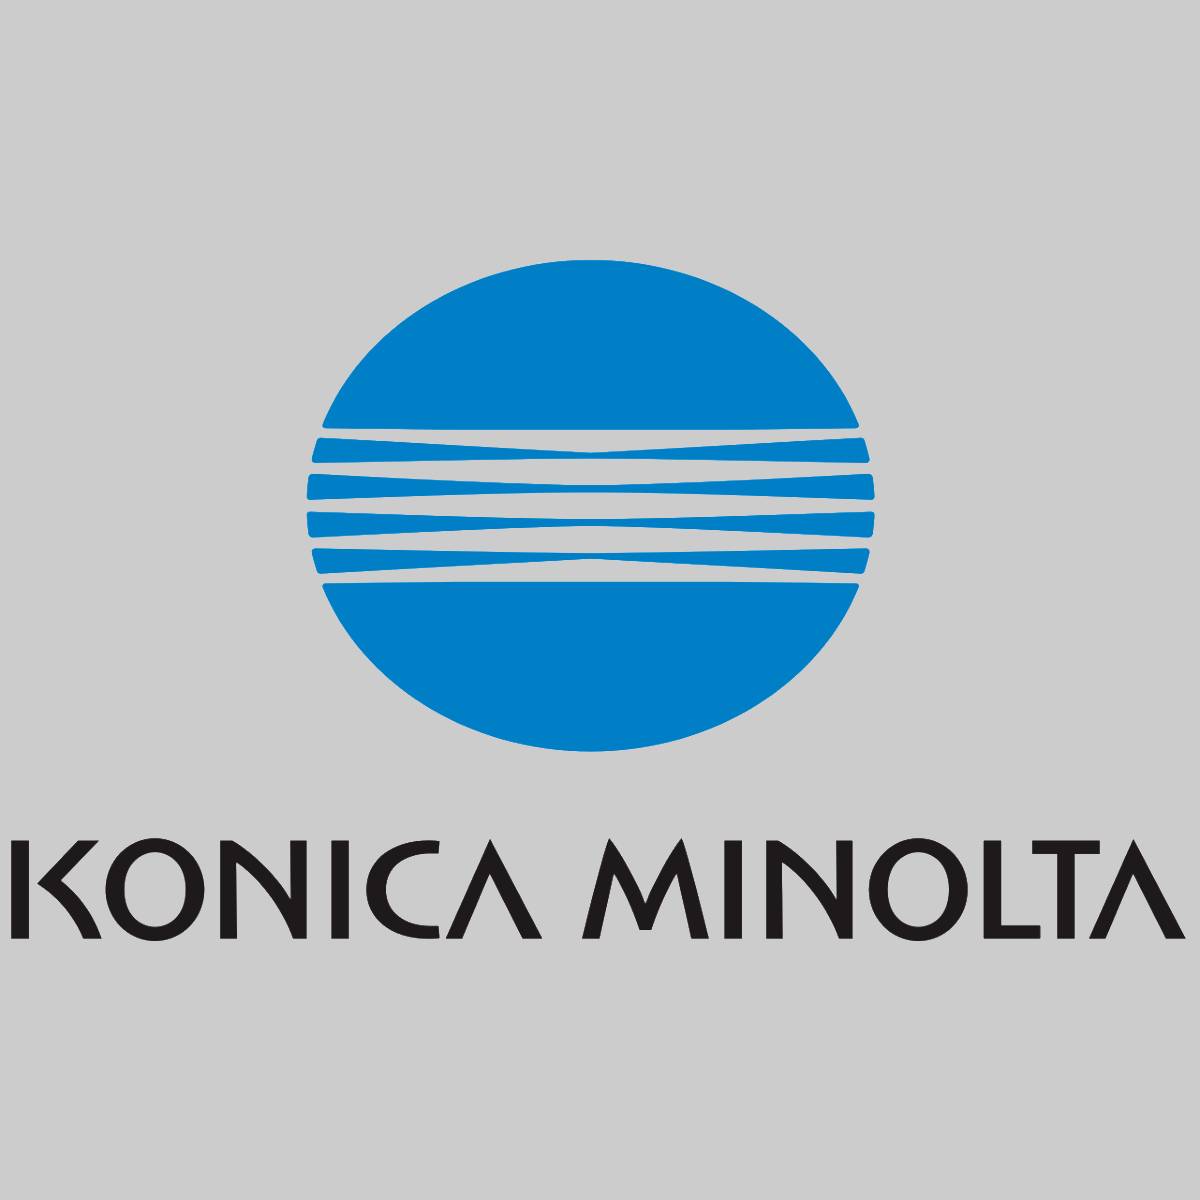 "Genuine Konica Minolta Cleaning Blade A0G6535000 for Bizhub 951 1051 1200 1250